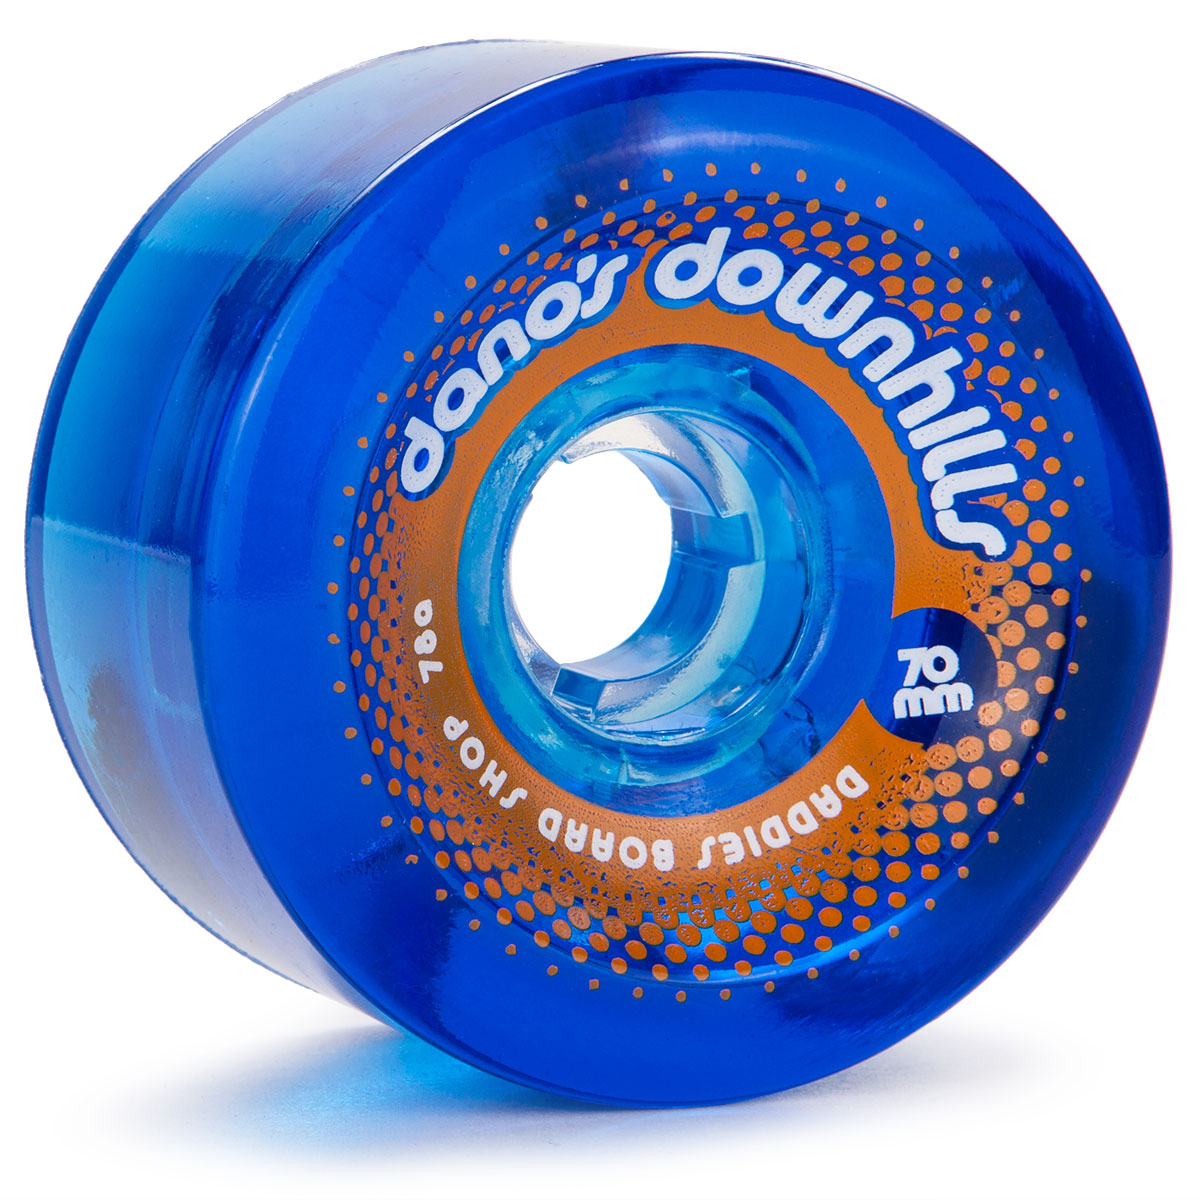 Dano's Downhills Longboard Wheels 70mm - 78a Blue – CCS